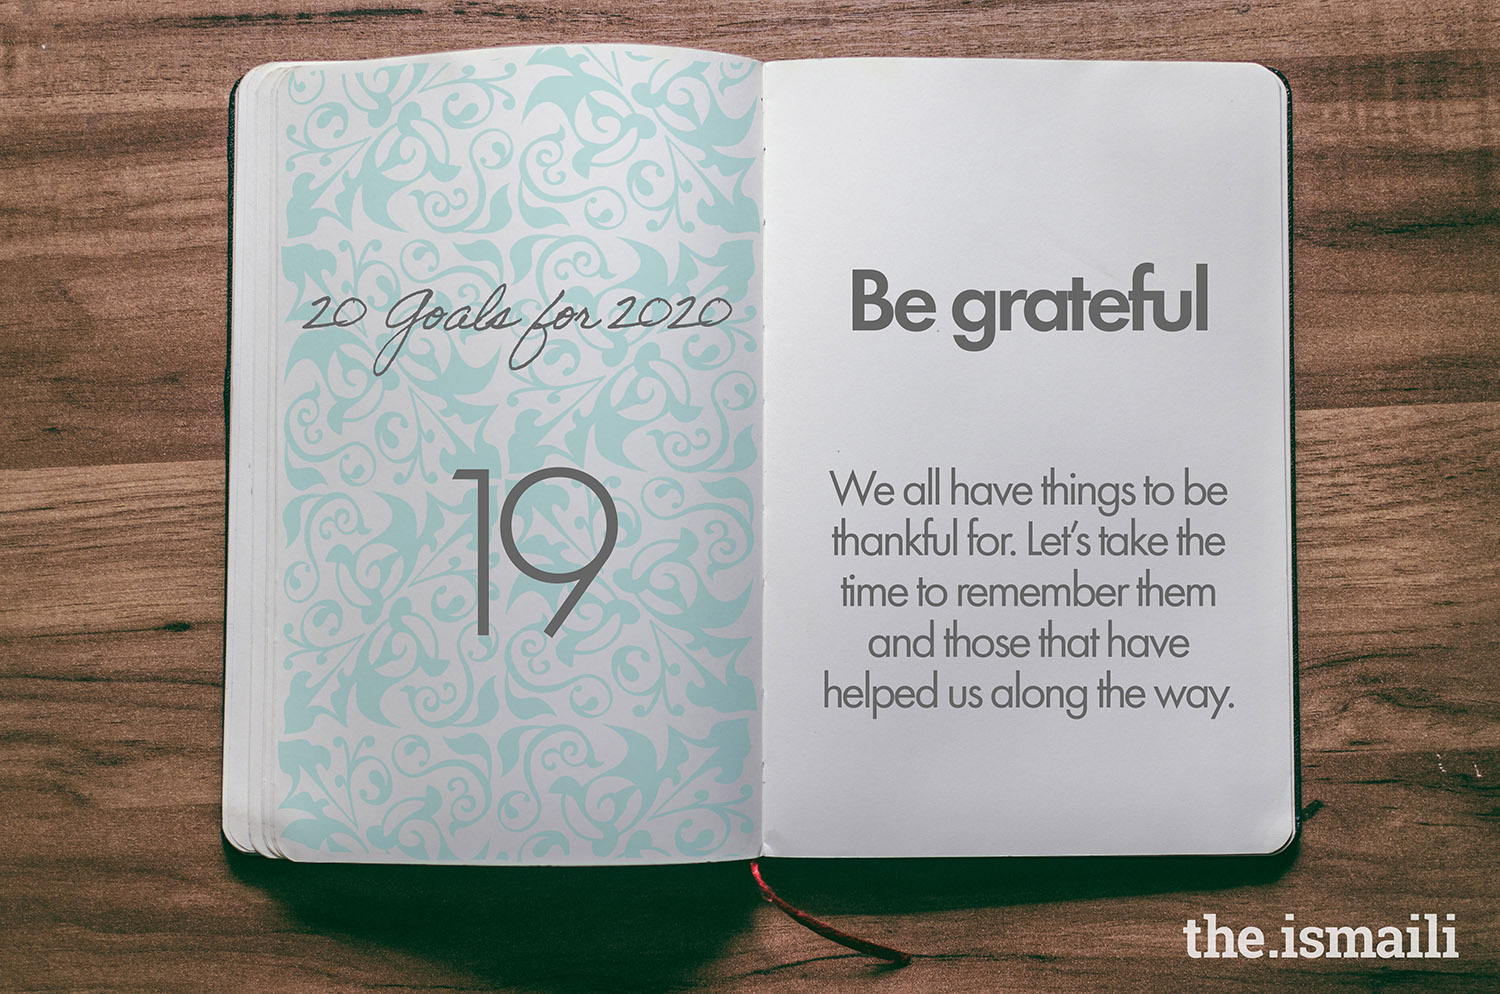 Goal 19: Be grateful